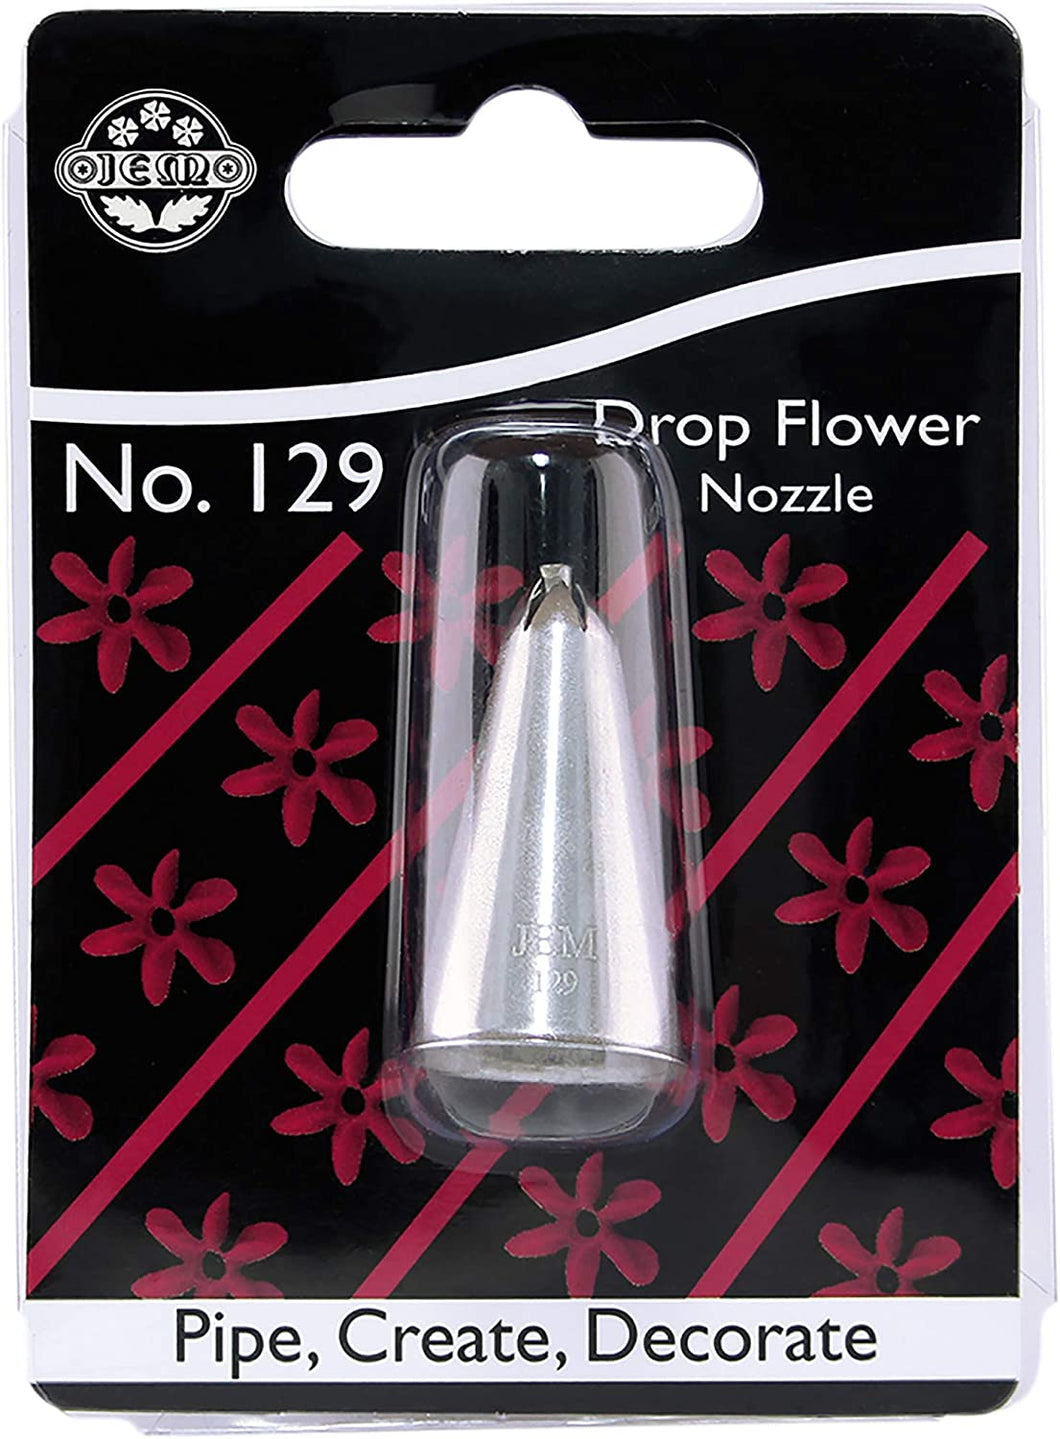 Piping Nozzle - Jem 129 Drop Flower - NZ129